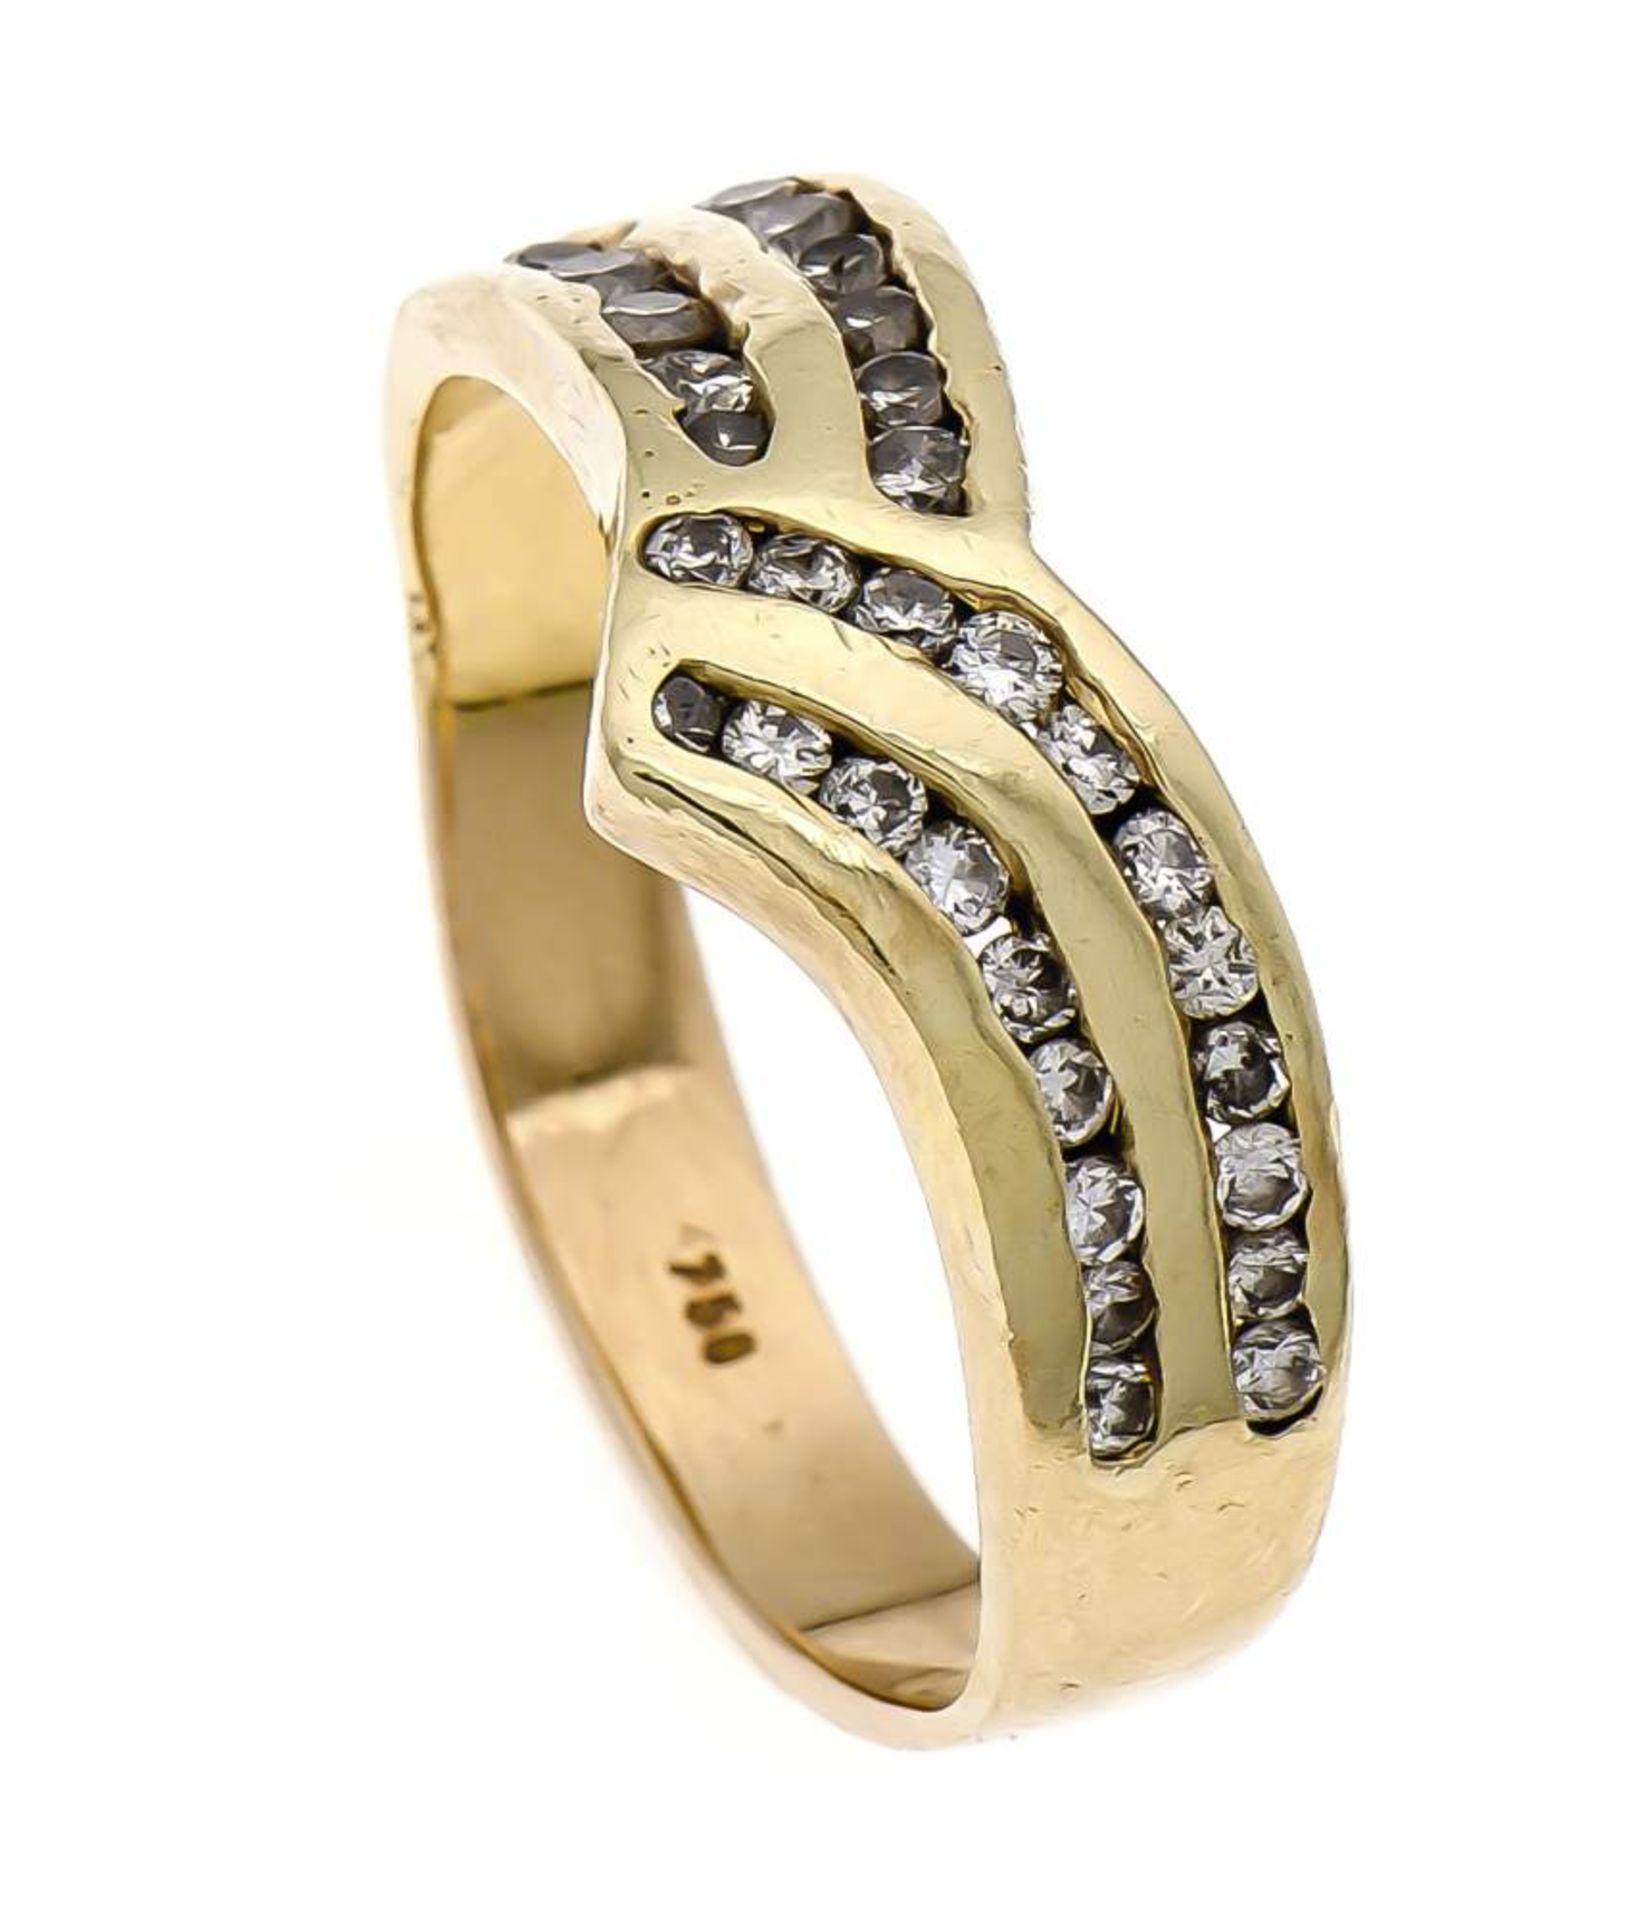 Brillant-Ring GG 750/000 mit Brillanten, zus. 0,60 ct l. get. W-W/SI-PI, RG 57, 4,2 g